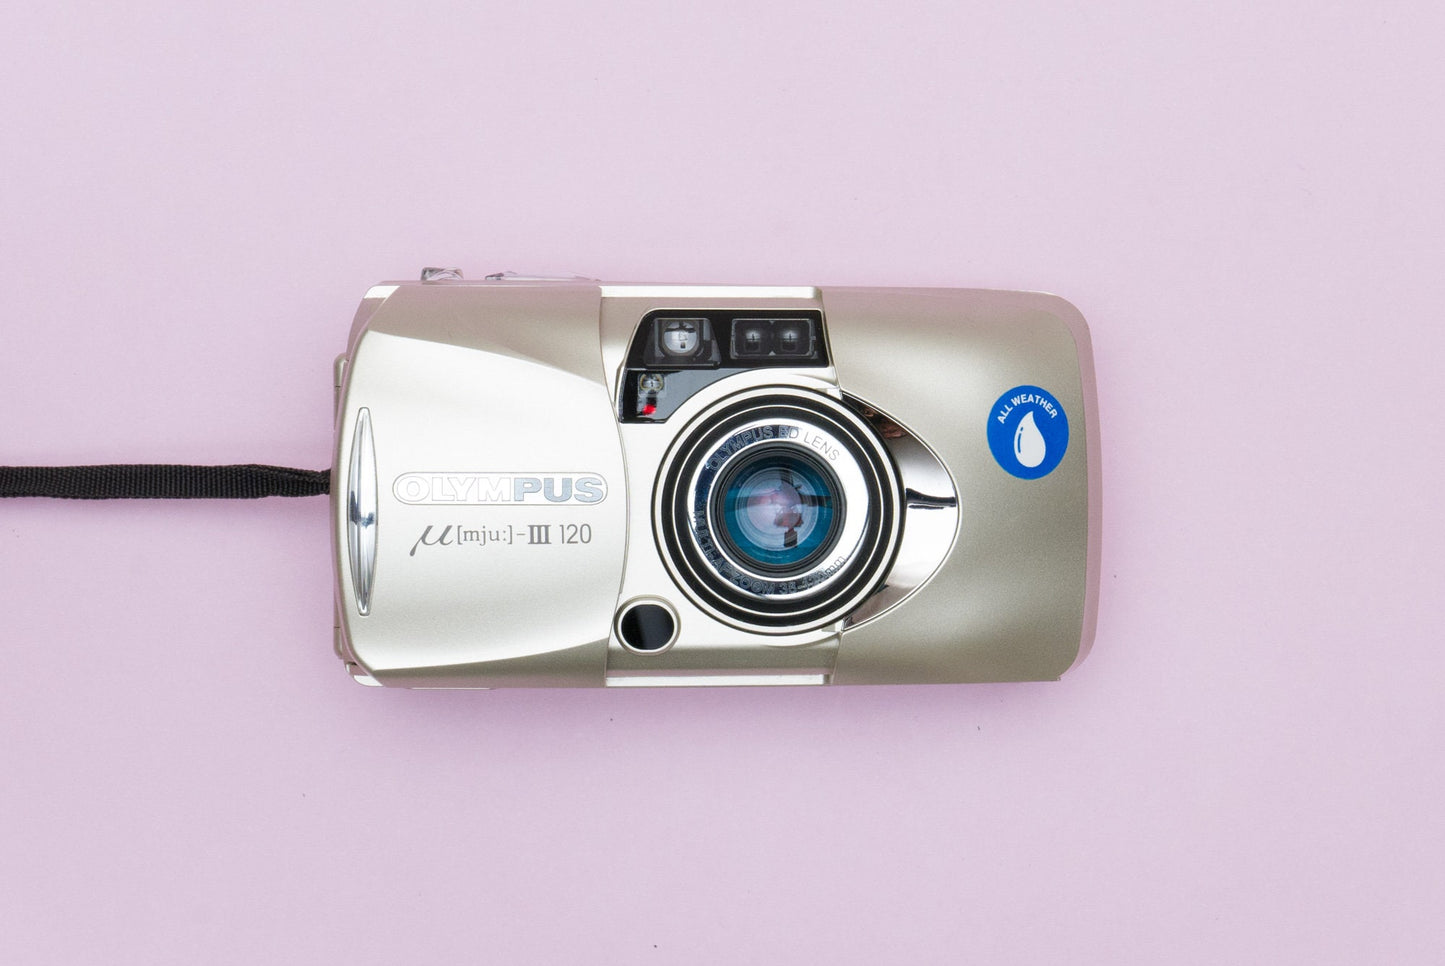 Olympus µ[mju:] Mju III 120 Compact 35mm Film Camera